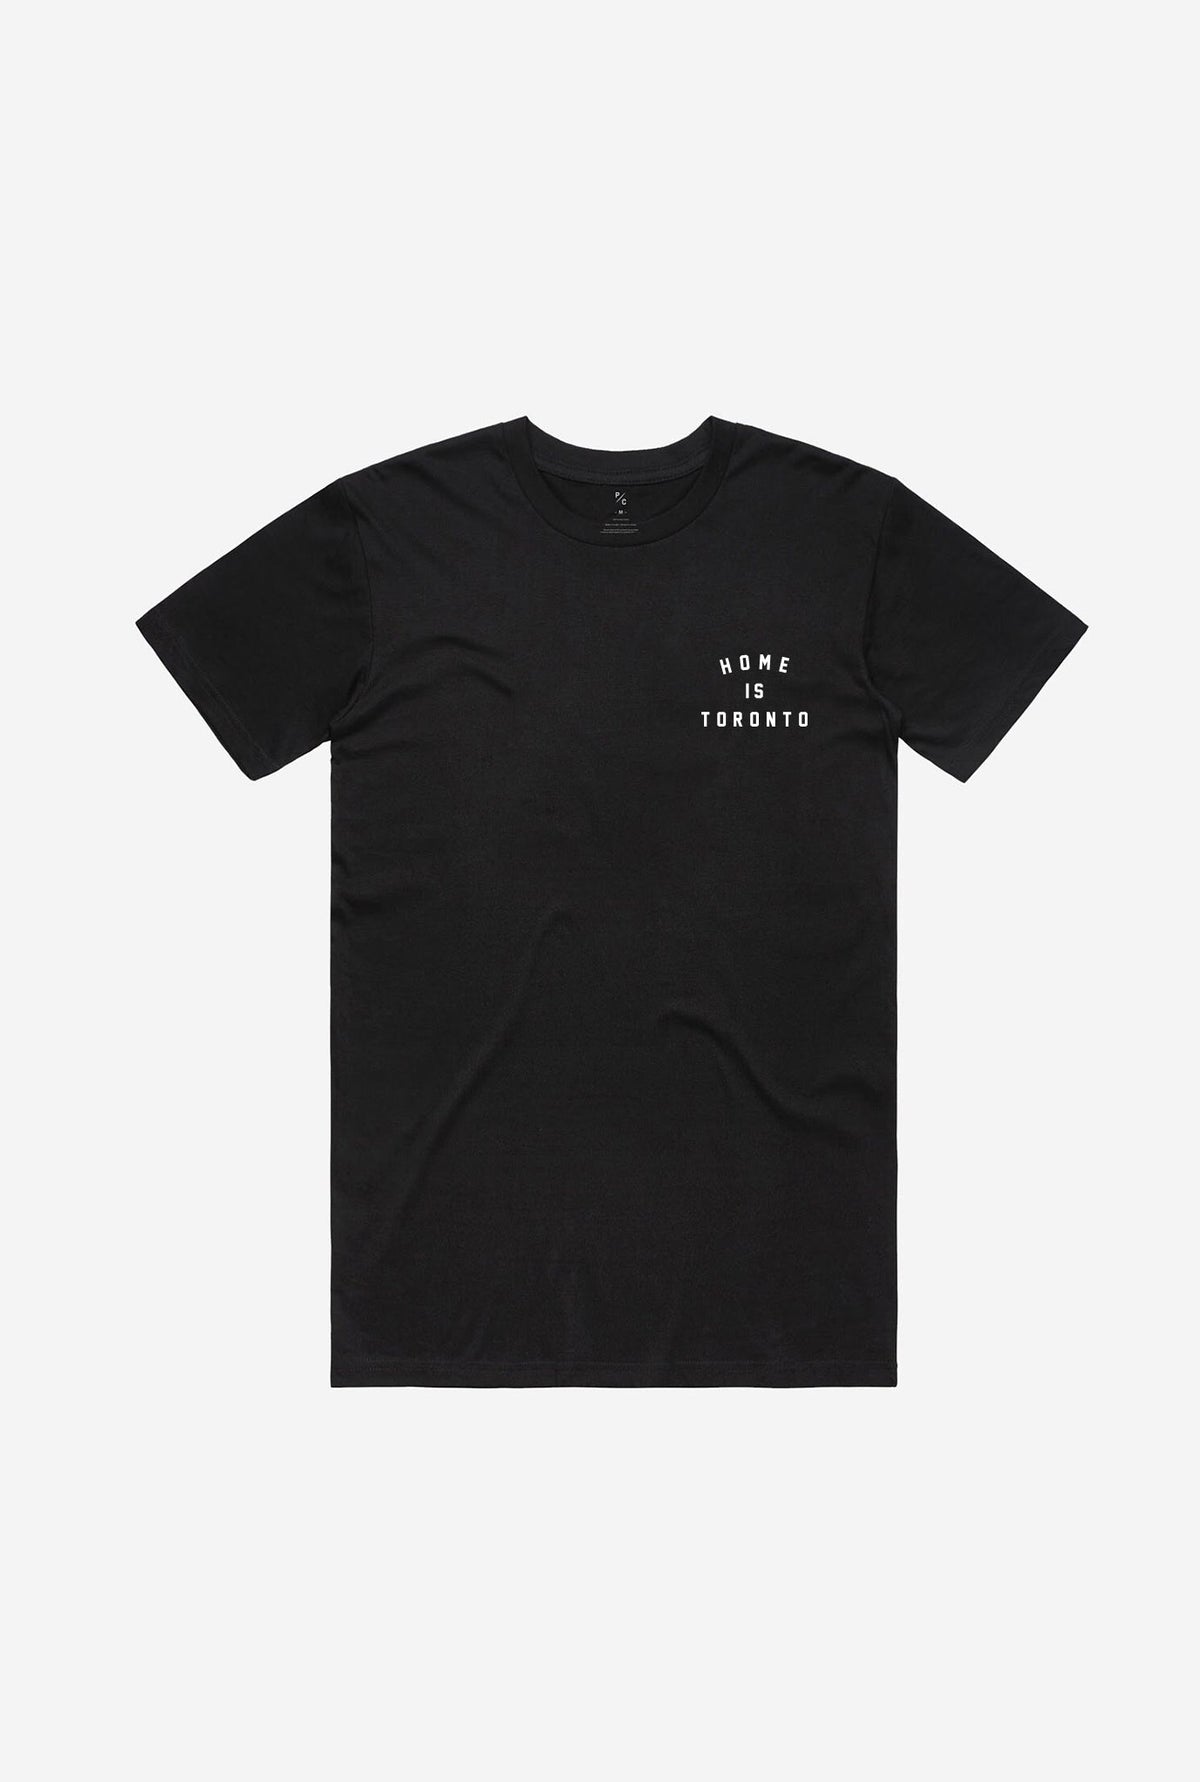 Home is Toronto Crescent T-Shirt - Black